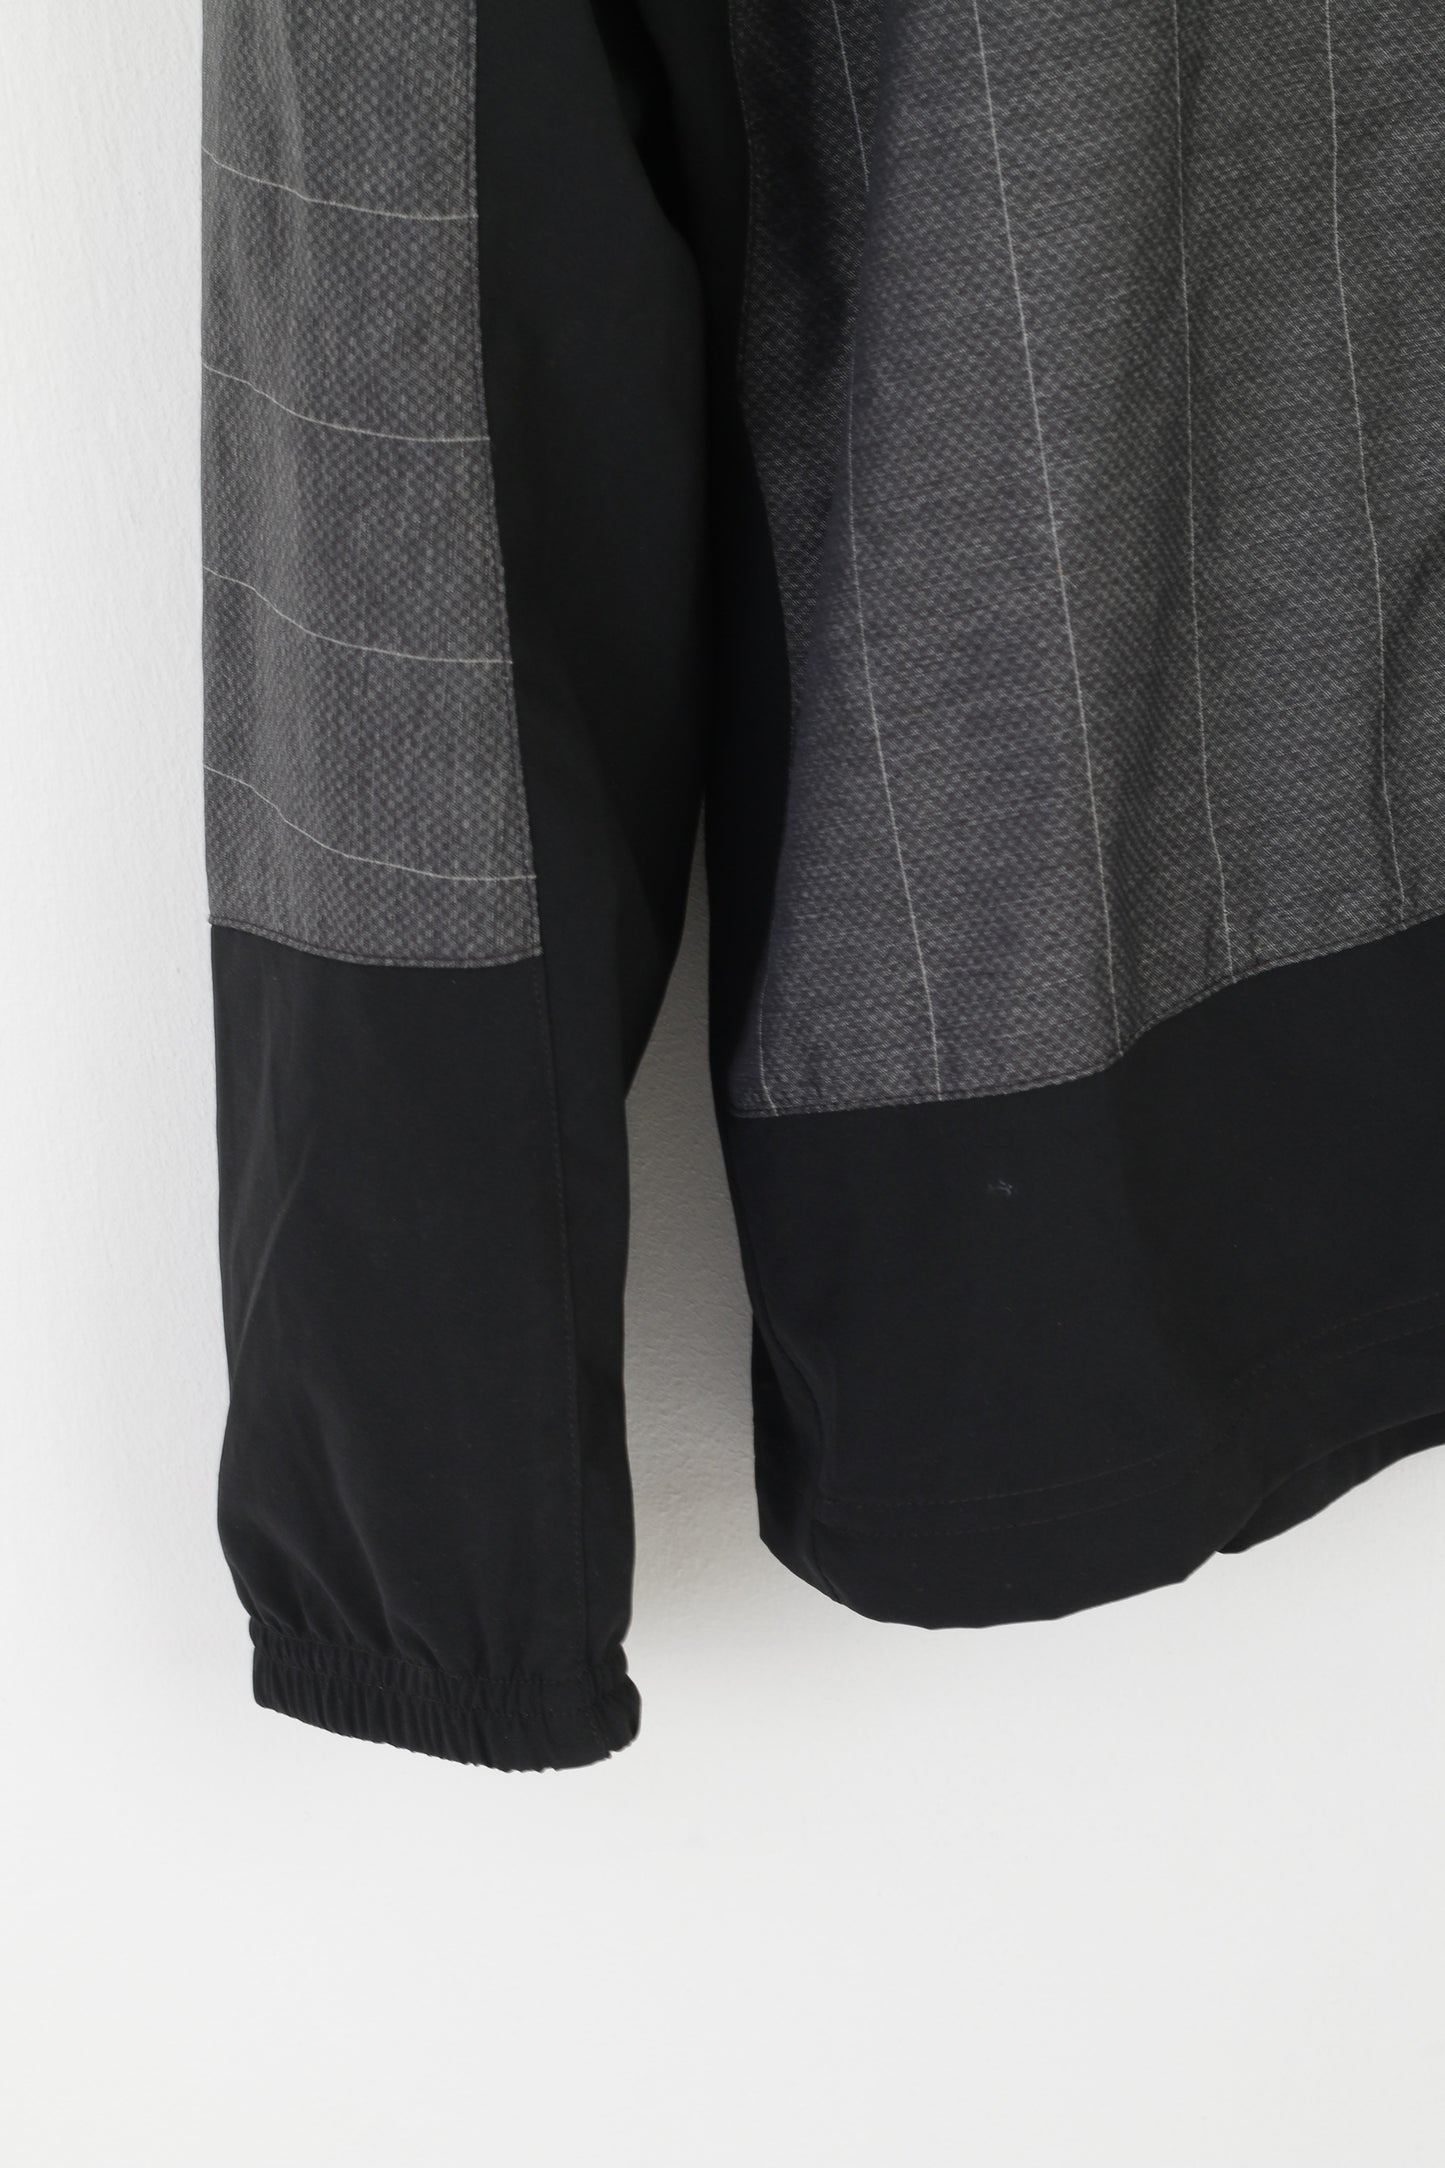 Adidas Supernova Women M Jacket Gray Sample Climaproof Sportswear Full Zipper Top